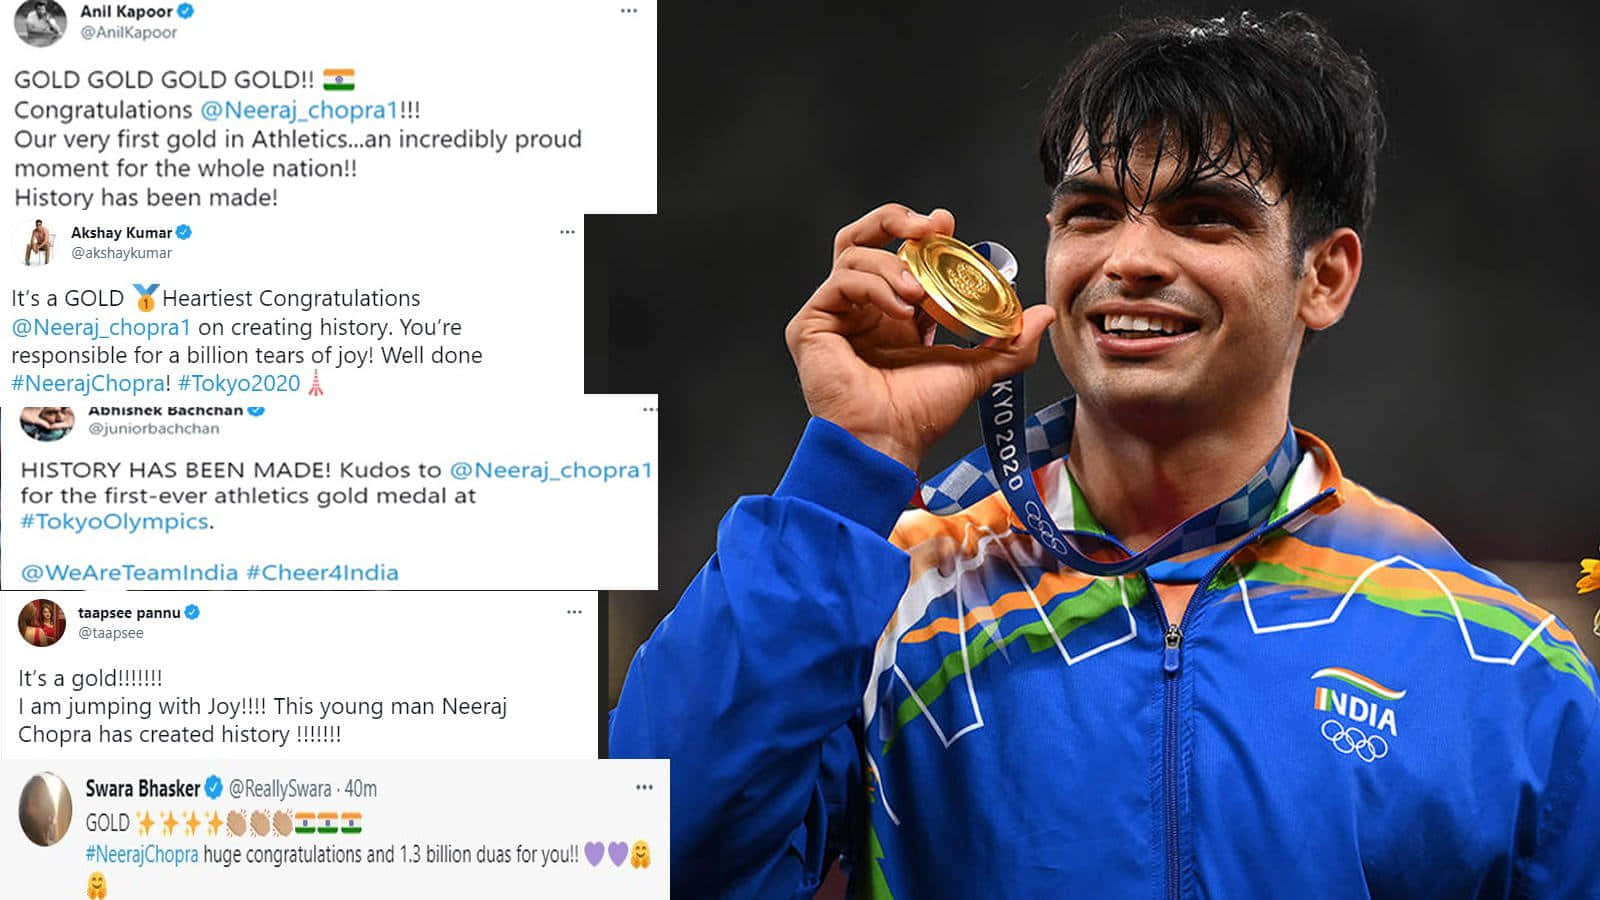 Neerajchopra, Indisk Spjutkastare, Vinner Guld På 2018 Commonwealth Games.